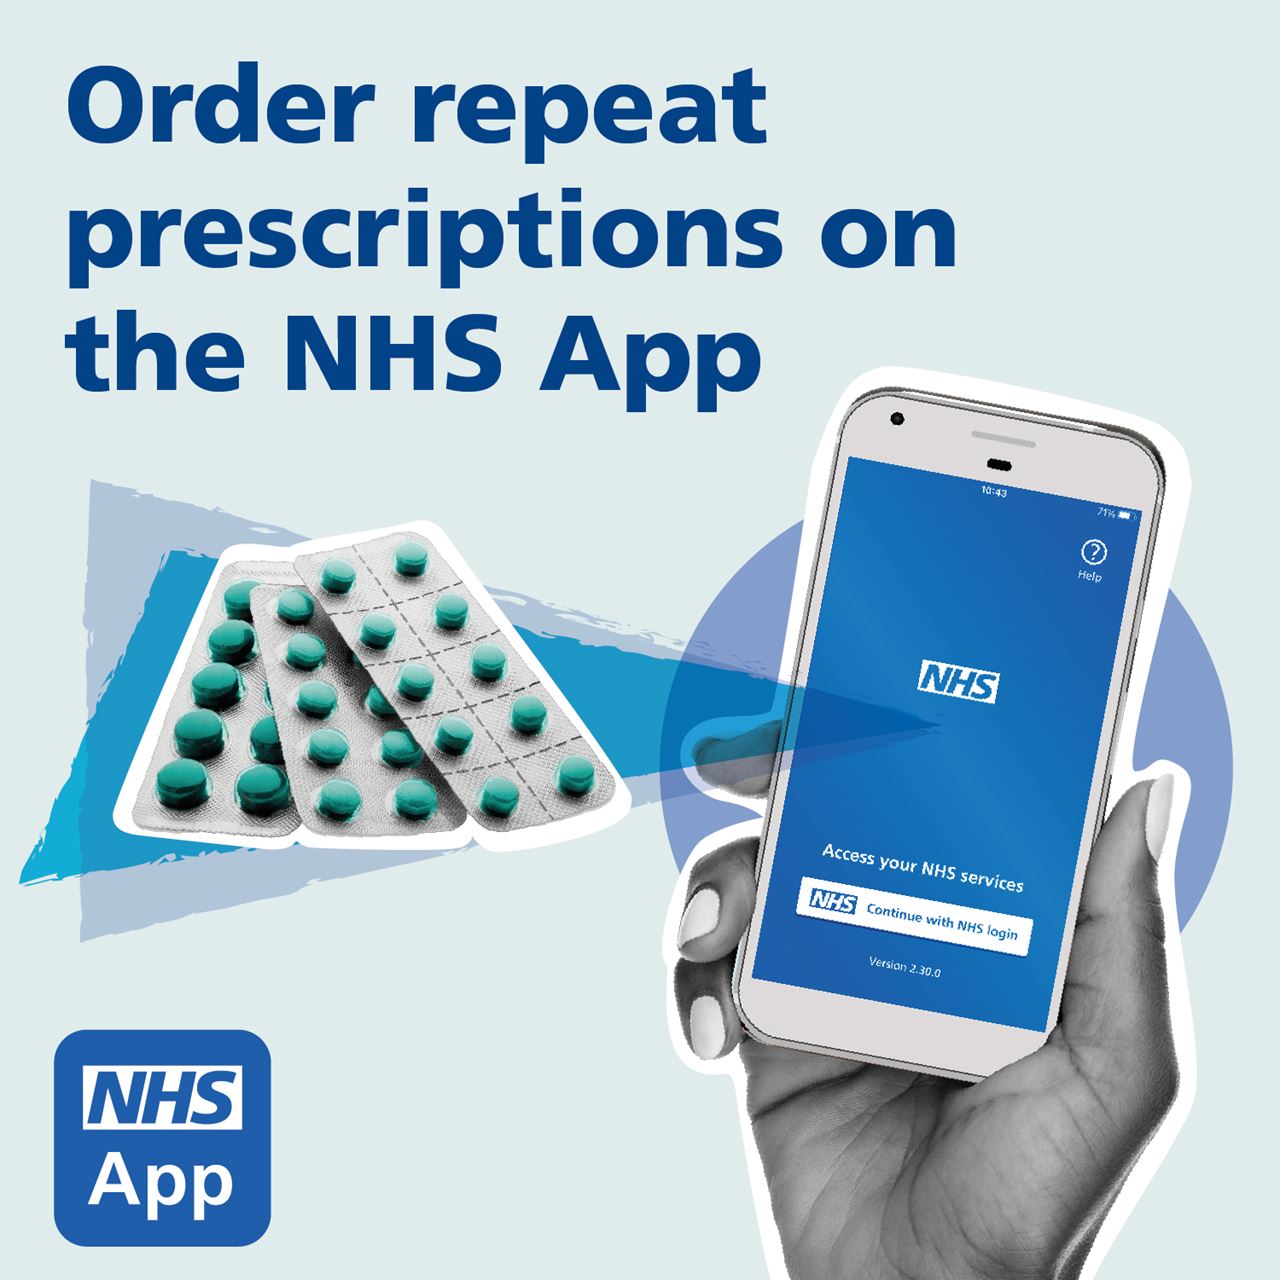 NHS App Prescription ordering